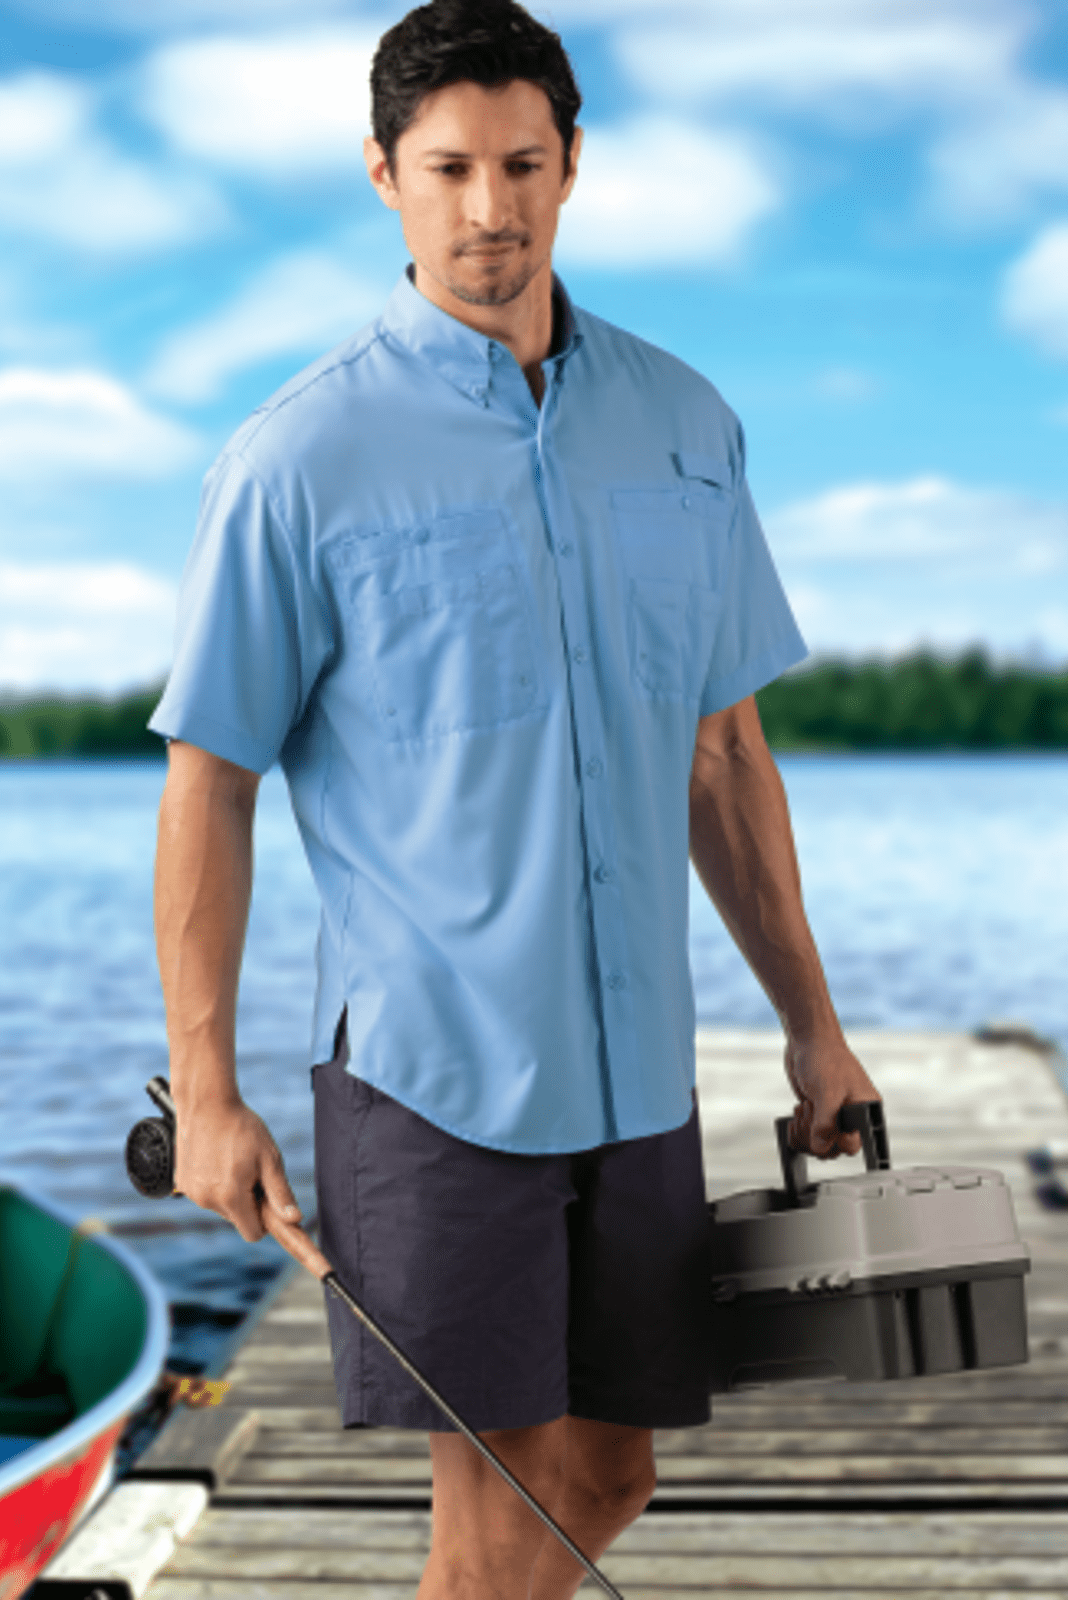 Paragon 700 Hatteras Performance Short Sleeve Fishing Shirt - Black